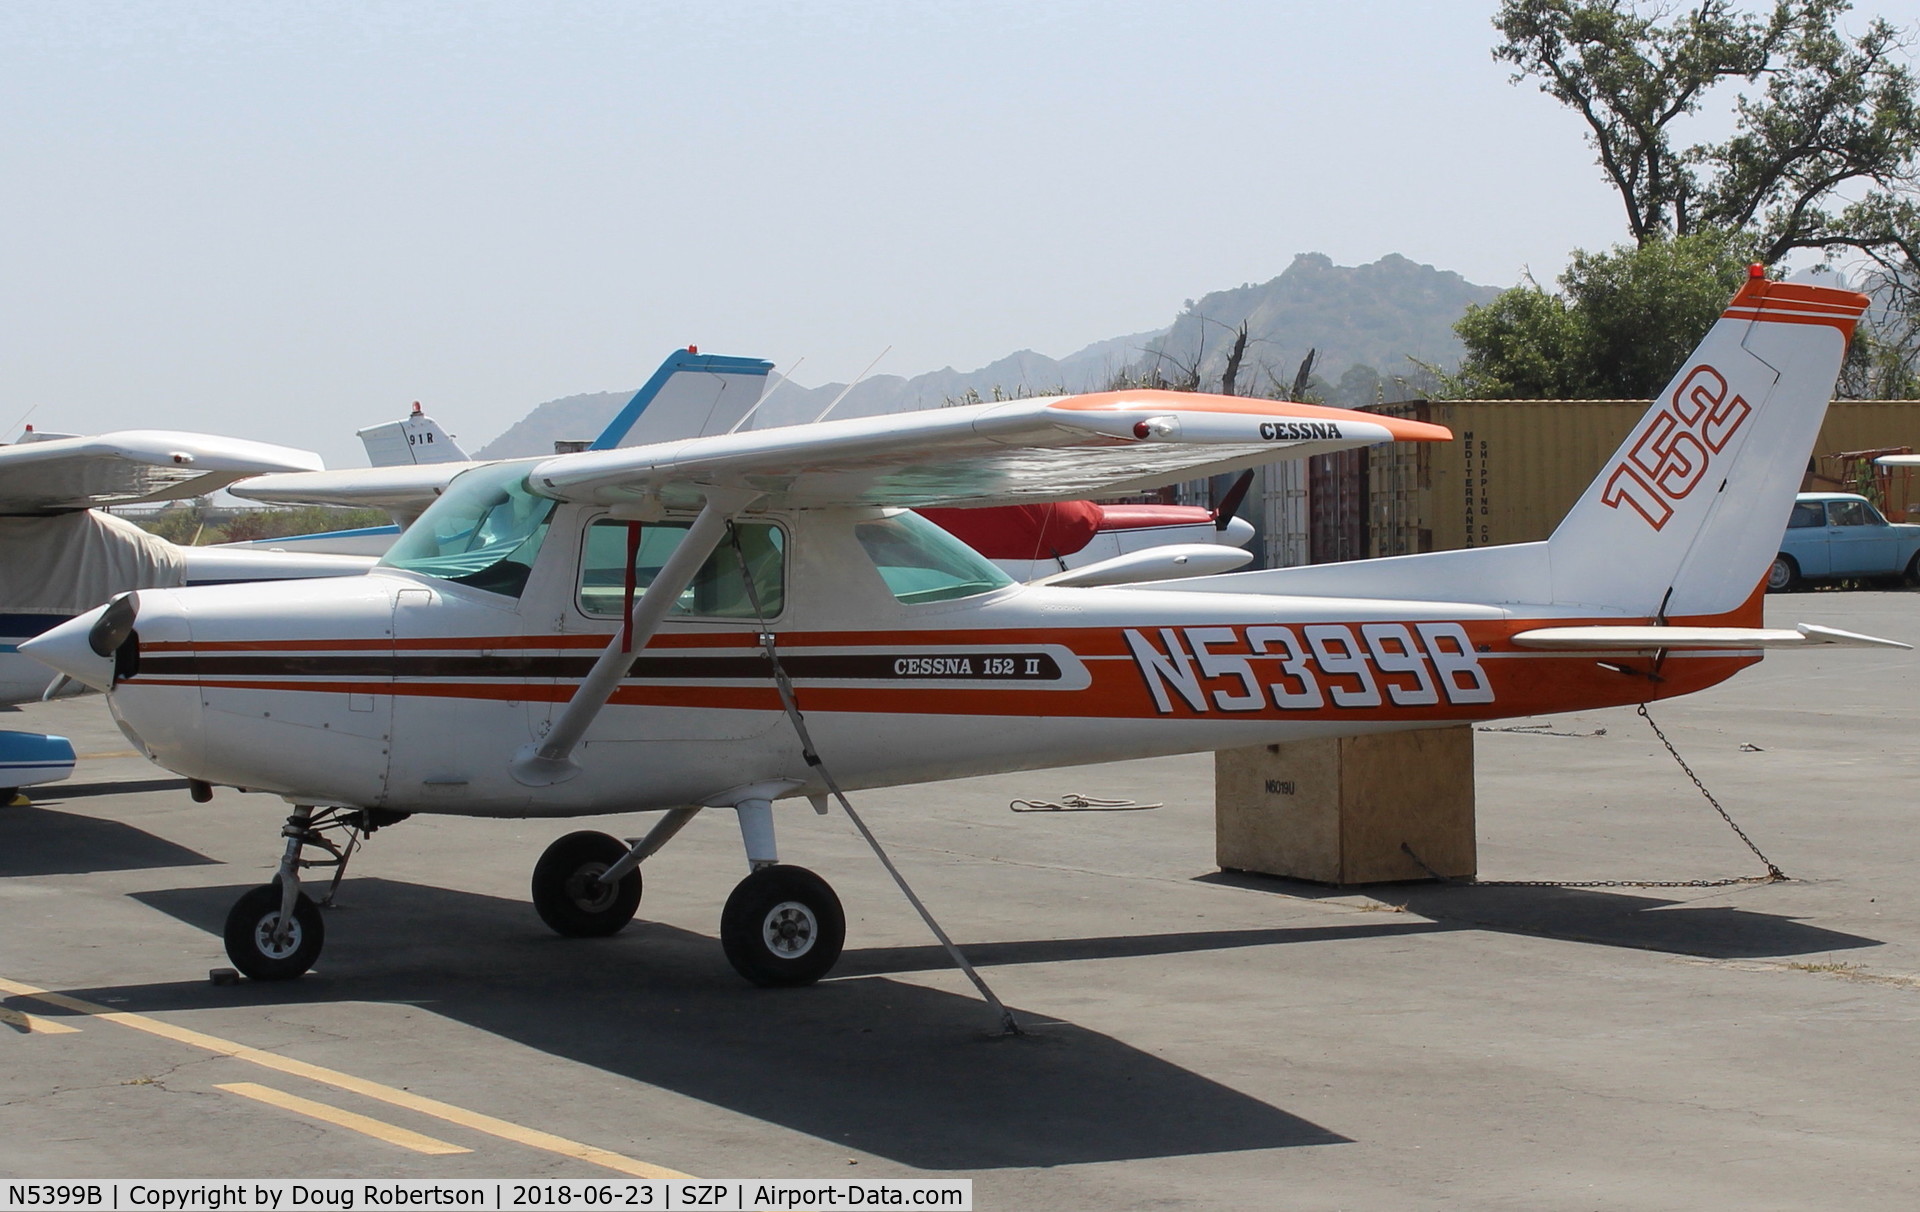 N5399B, 1979 Cessna 152 C/N 15283861, 1979 Cessna 152 II, Lycoming O-235 115 Hp